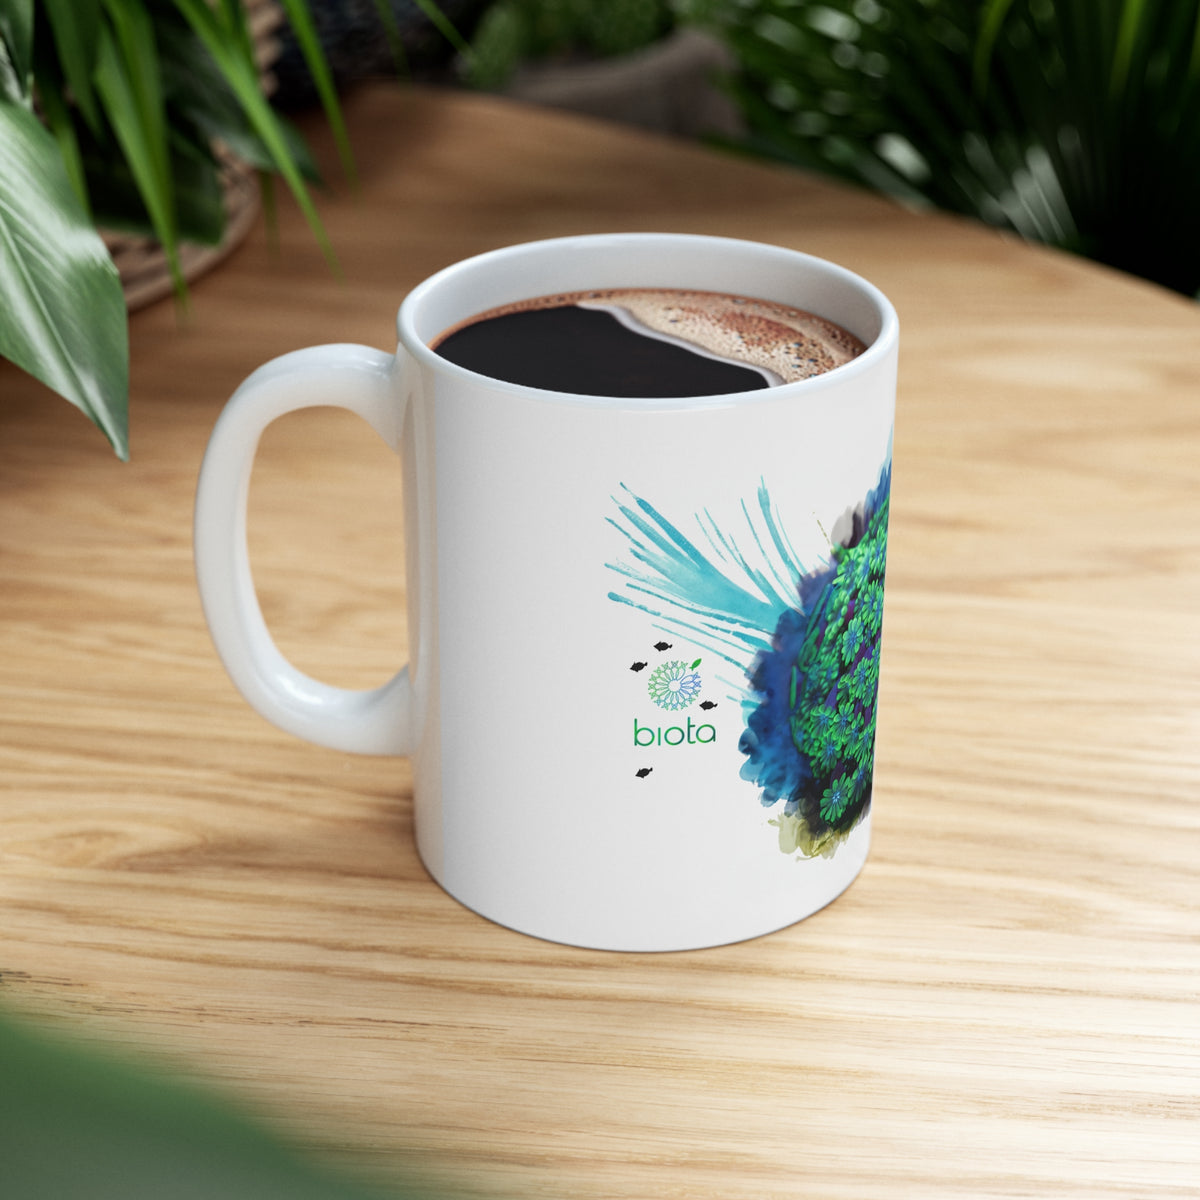 Biota x Shakerbreakersreef Collab Coffee Mug